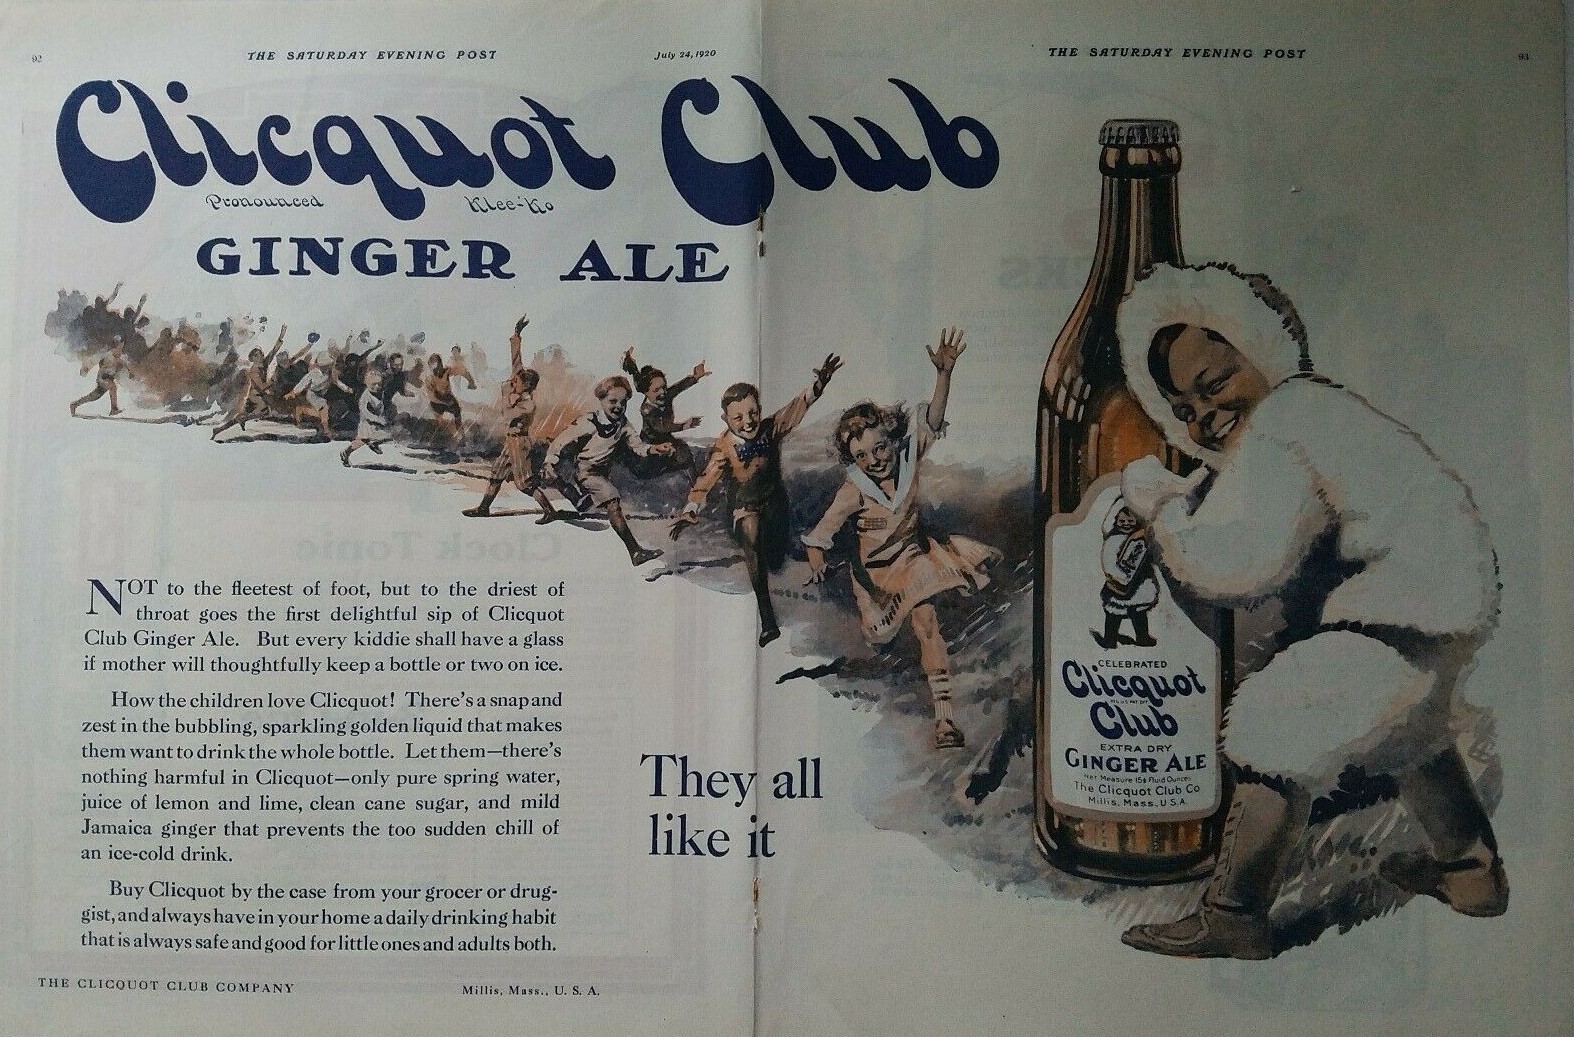 1920 Clicquot Club ginger alejpg